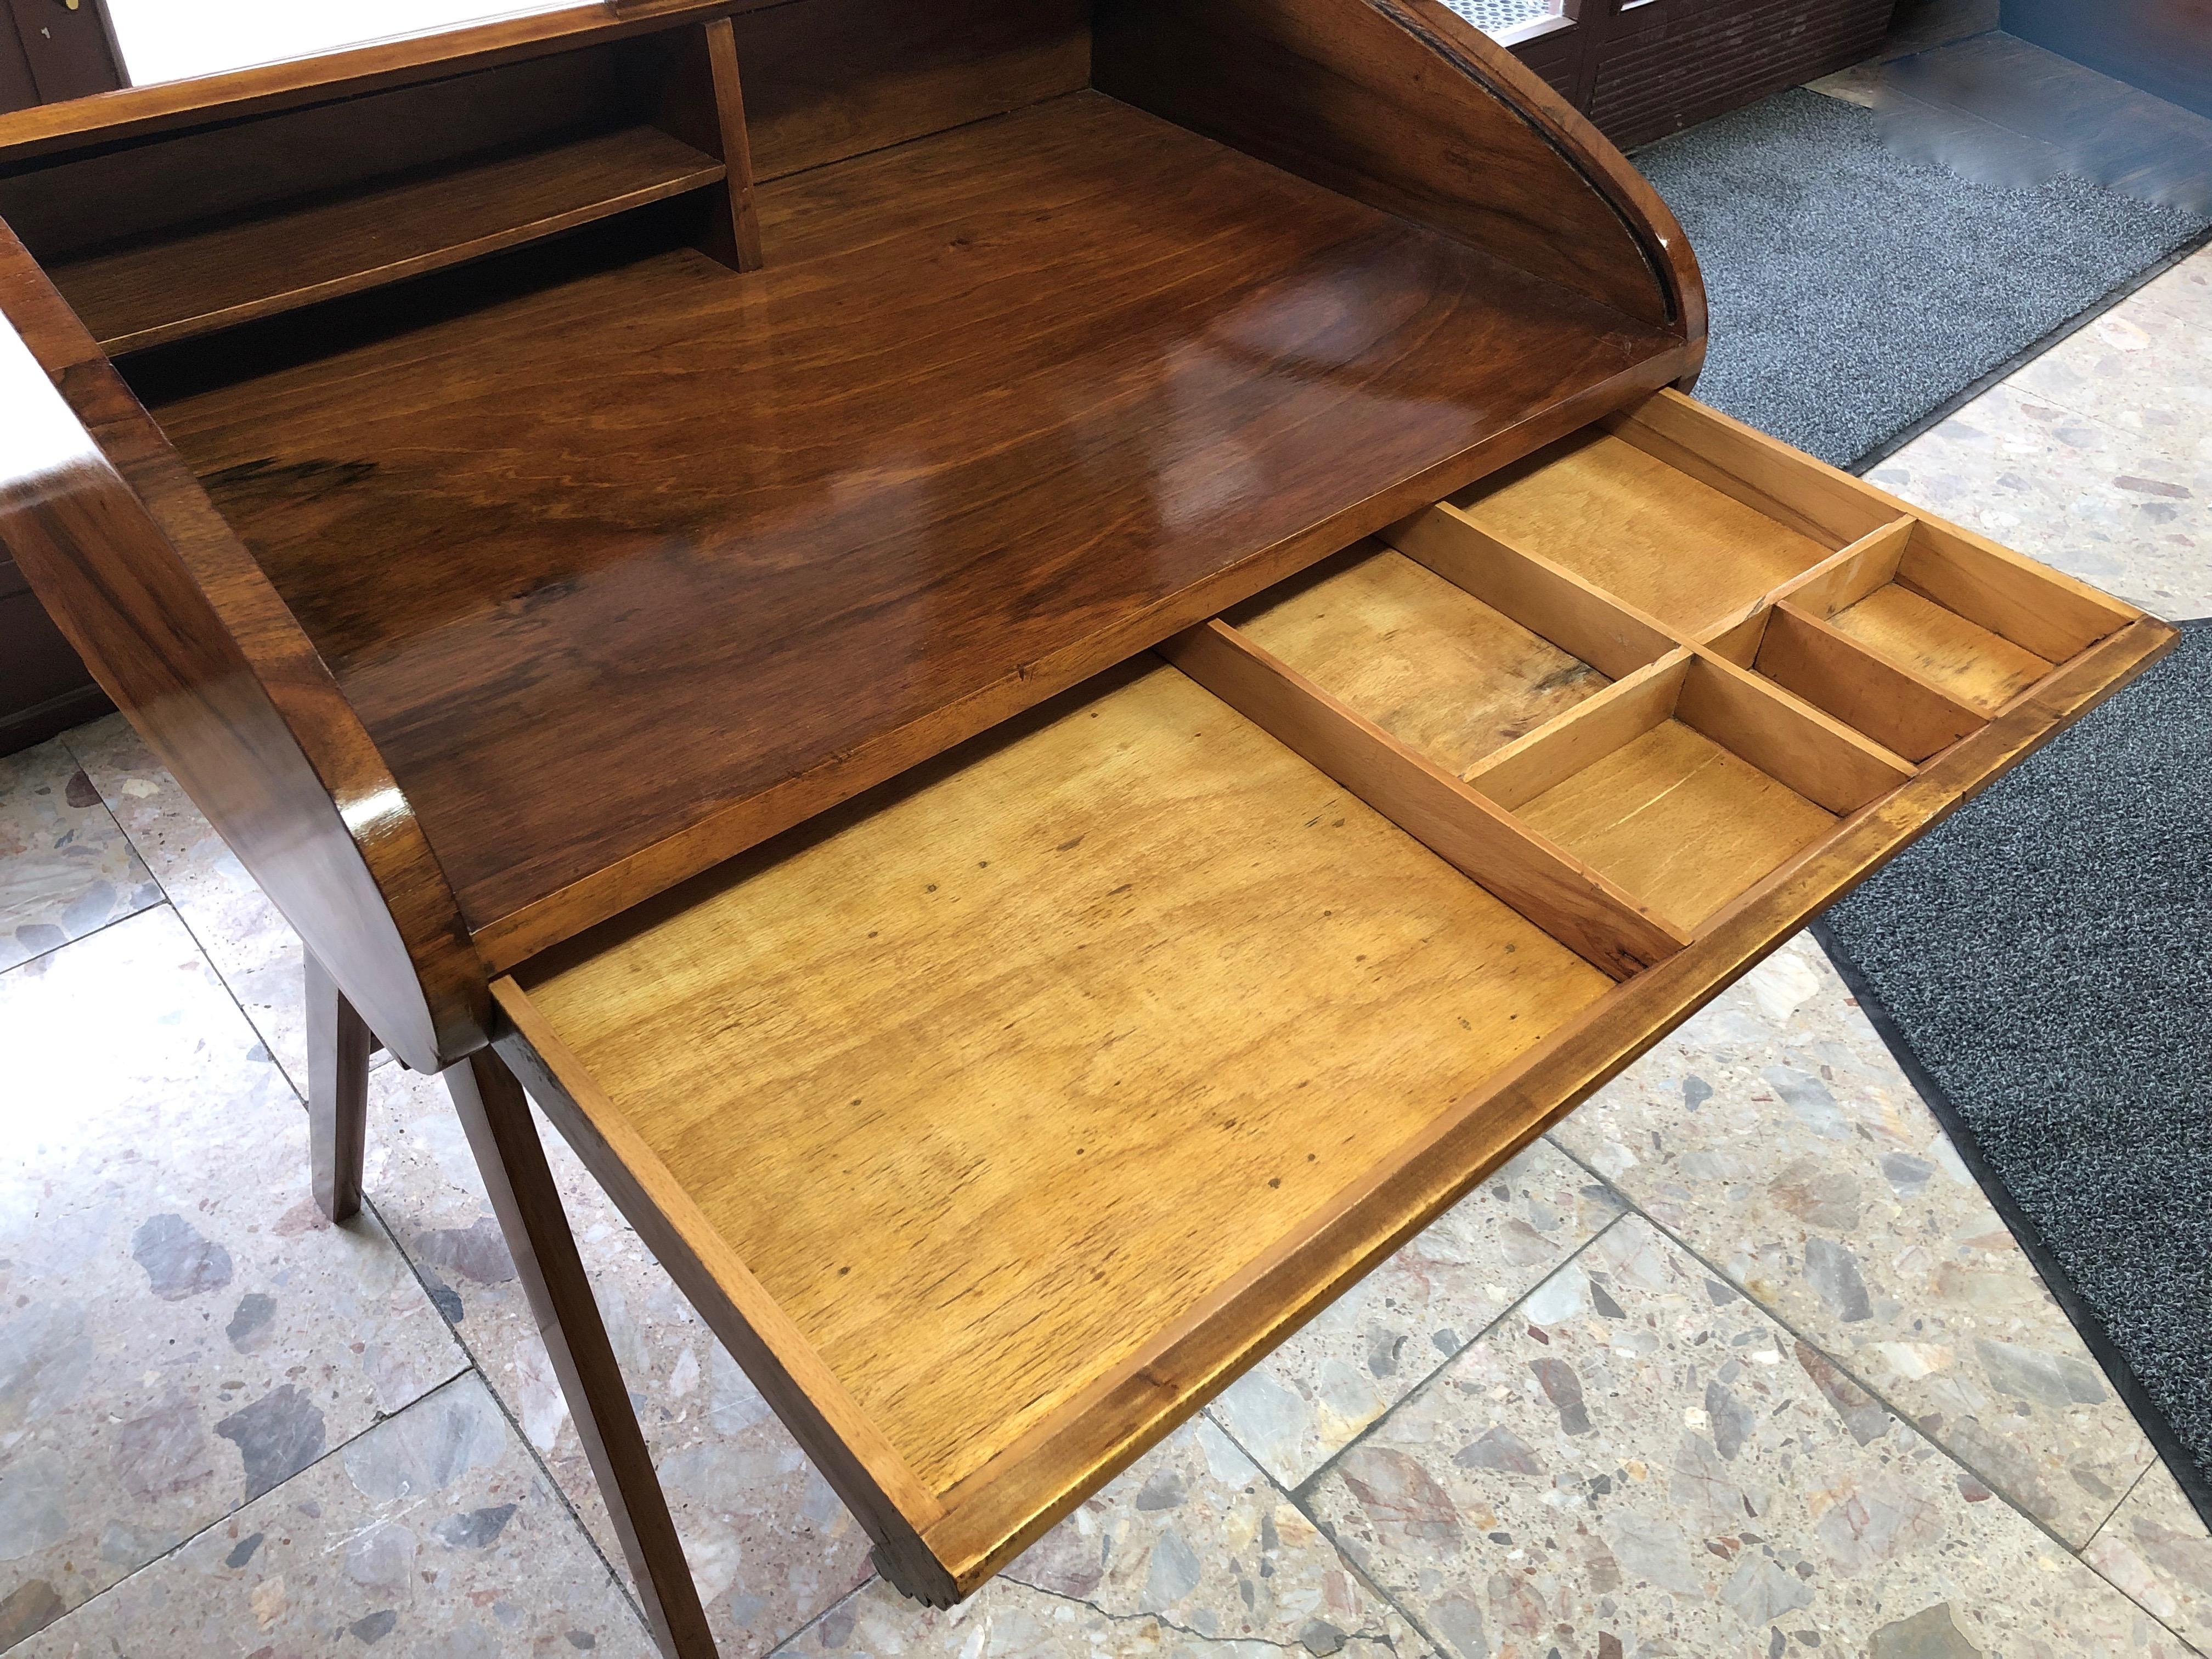 Rare Mid-Century Modern Desk with Roll-Top, Walnut Veneer, 1950s, Fully Restored 2